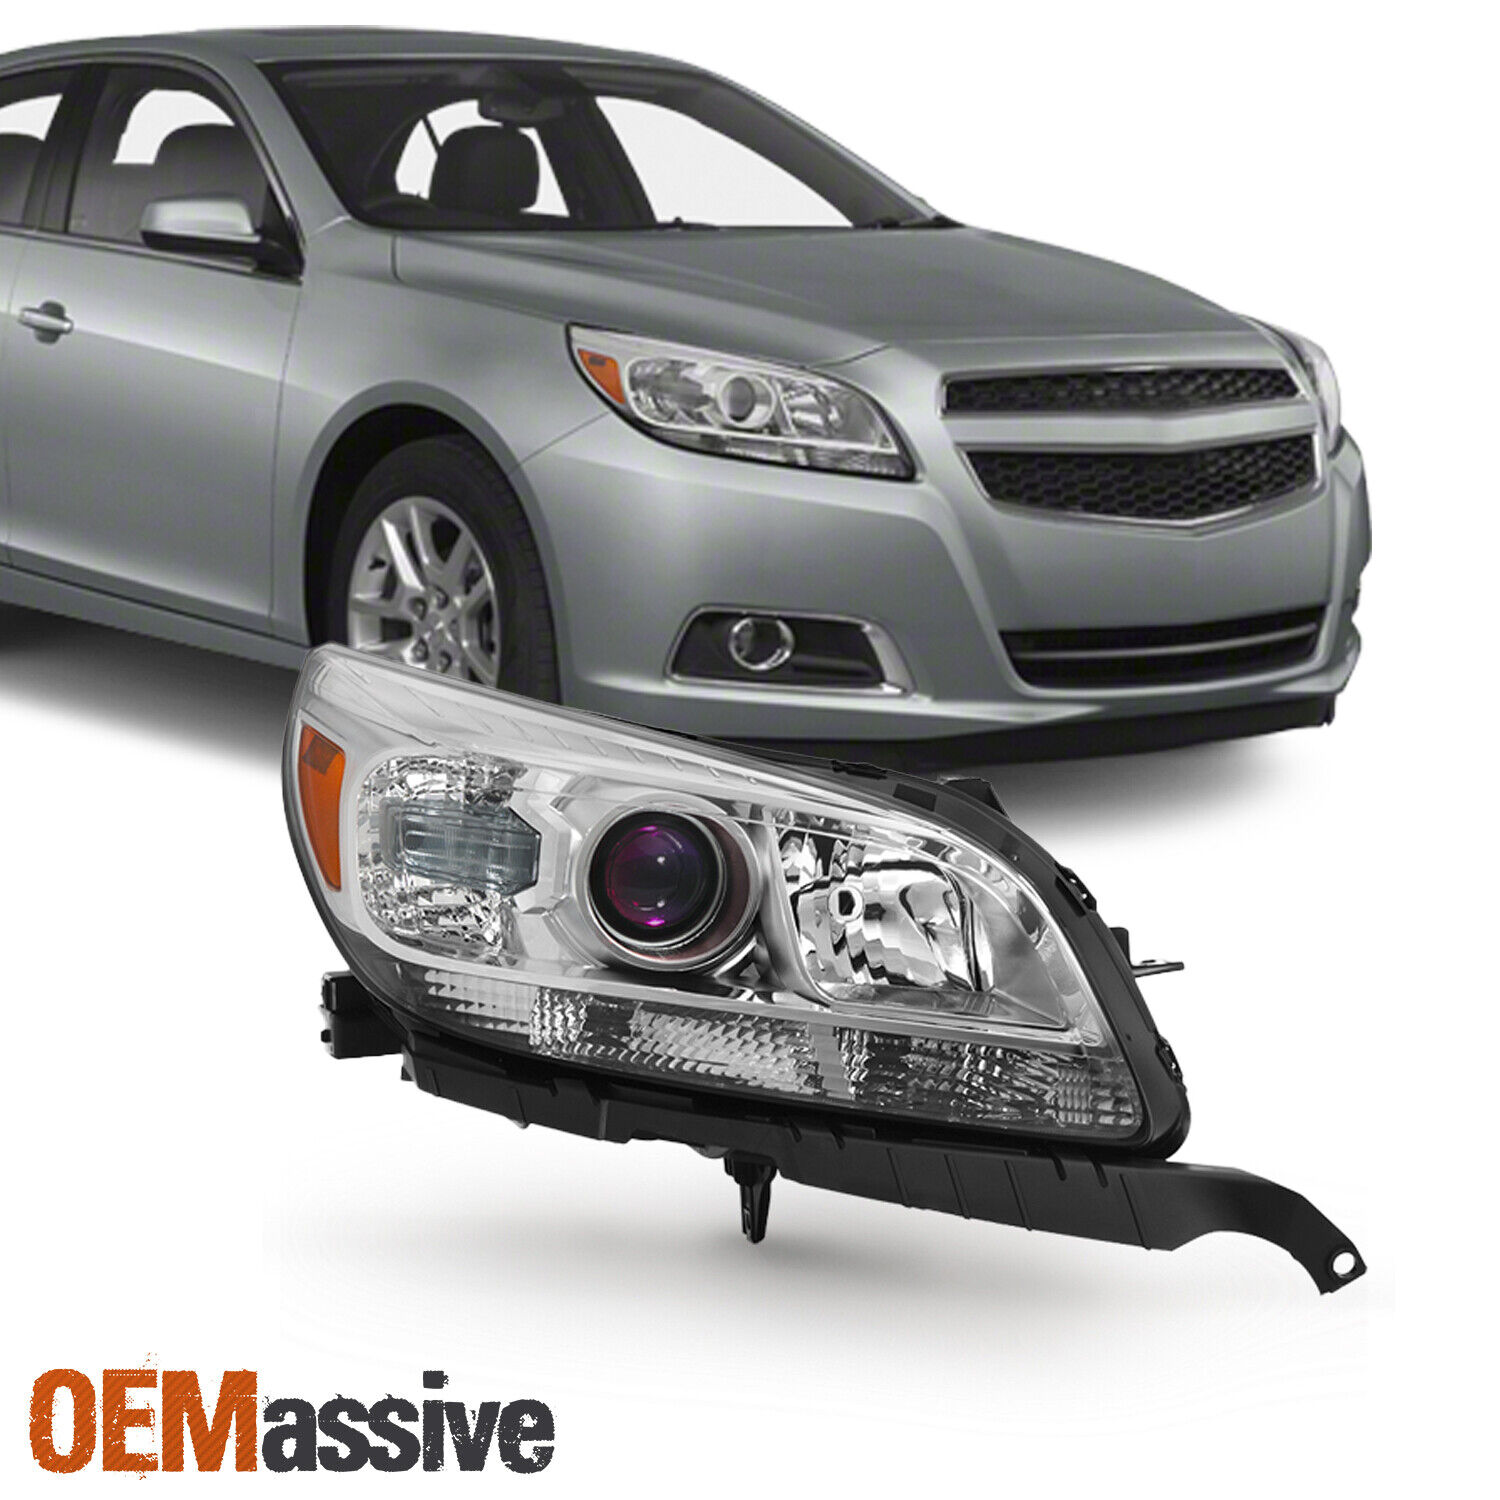 Fit 2013-2015 Chevy Malibu LT LTZ Passenger Side Projector Headlight Replacement